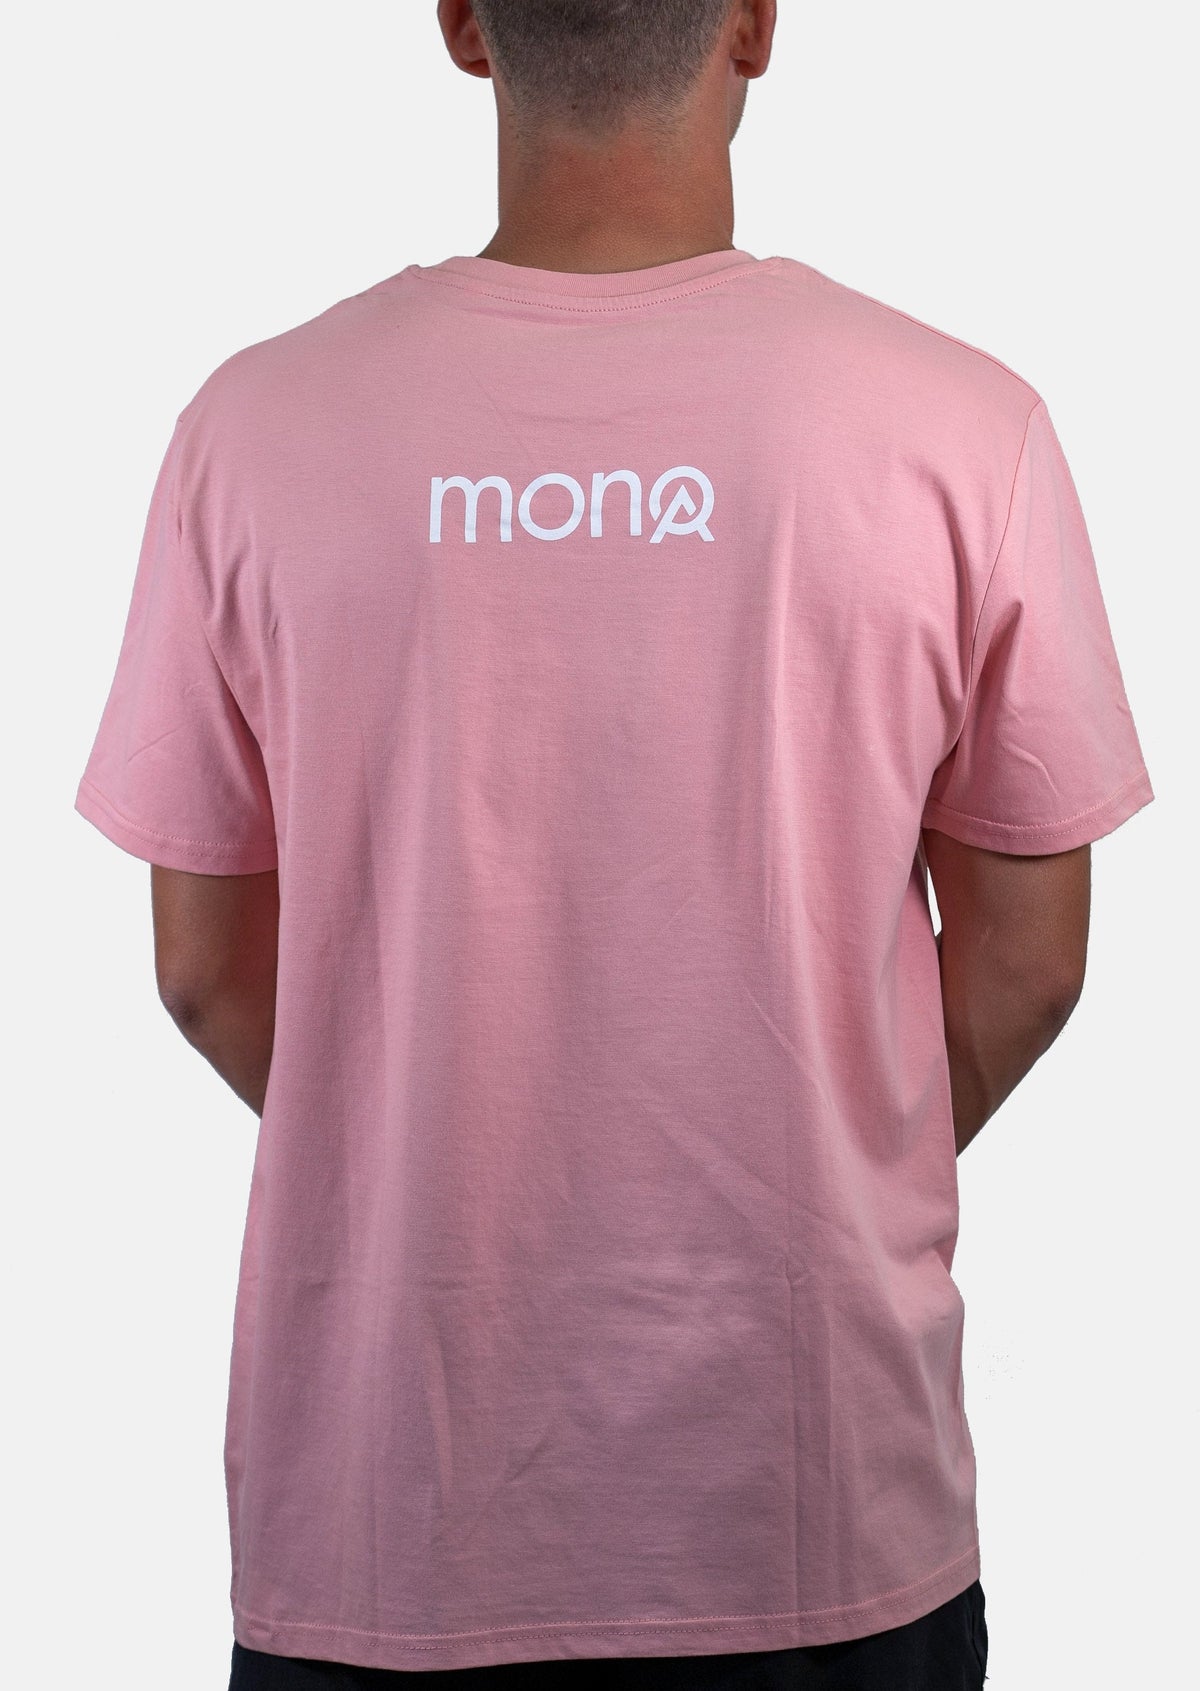 Camiseta MONOA unisex